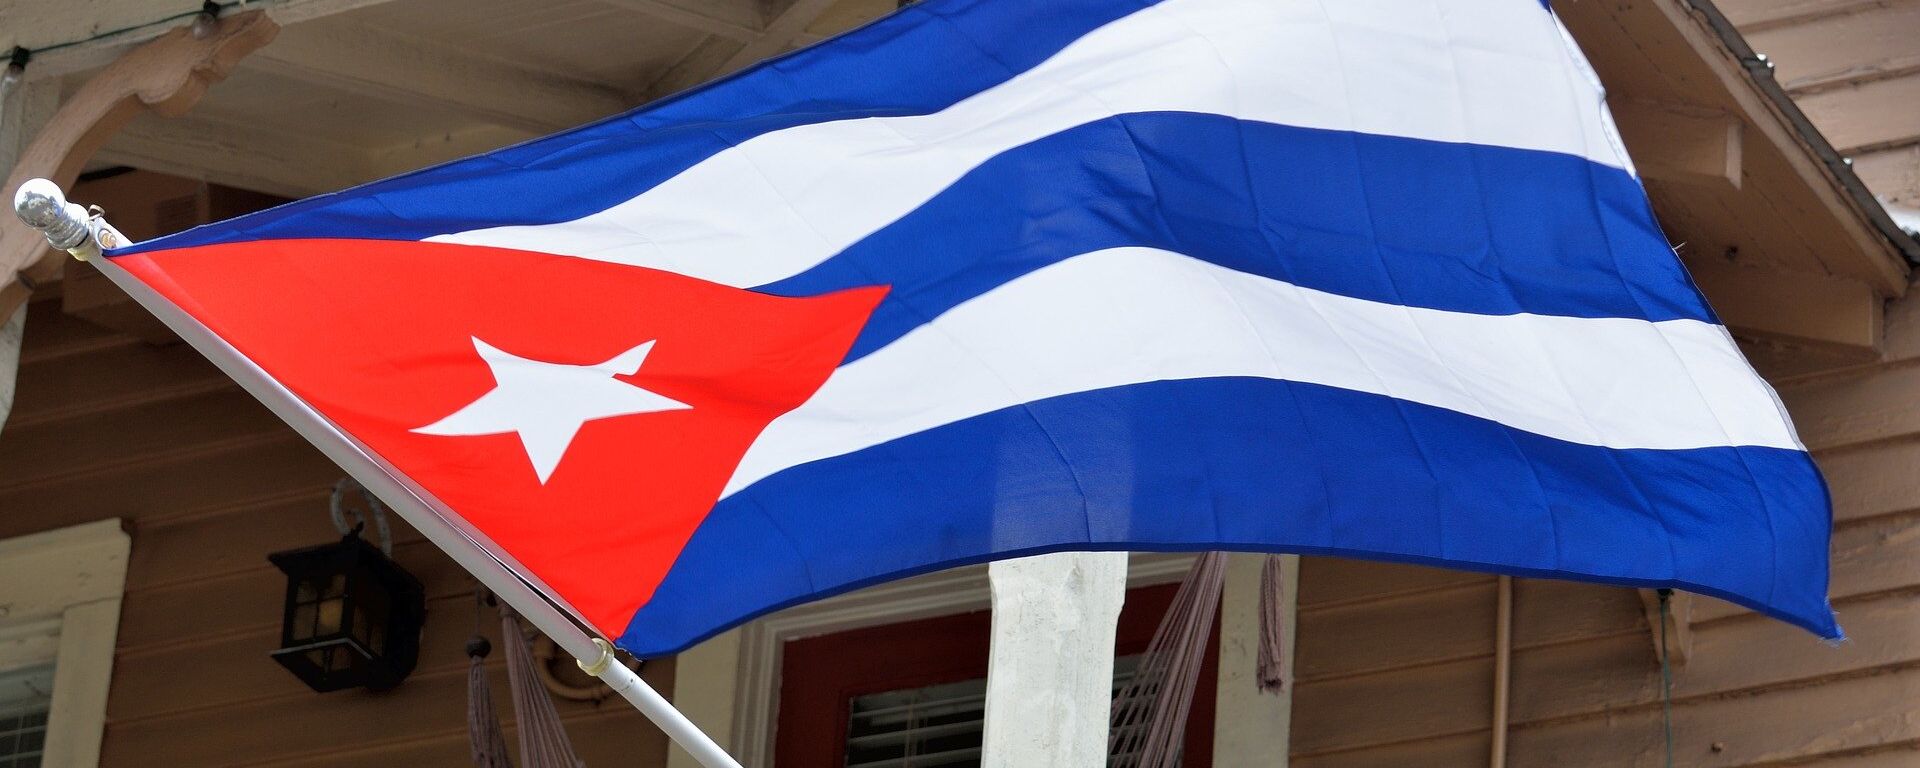 La bandera de Cuba - Sputnik Mundo, 1920, 06.07.2021